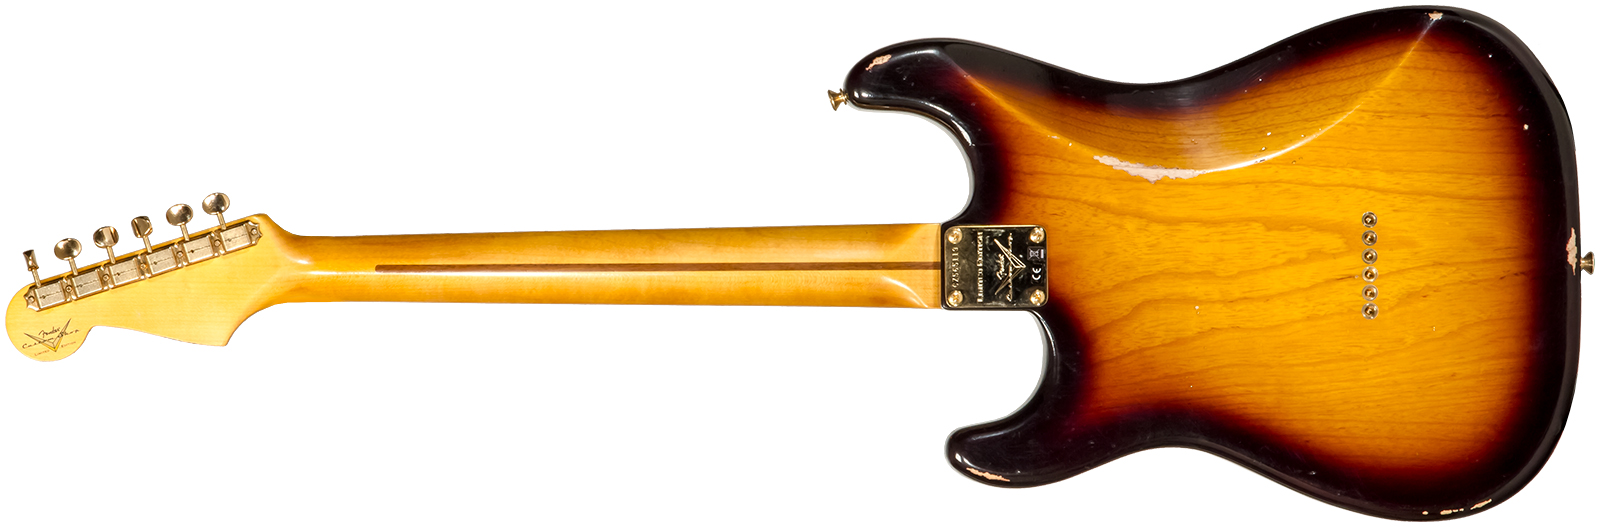 Fender Custom Shop Strat 1956 Hardtail Gold Hardware 3s Ht Mn #cz565119 - Relic Faded 2-color Sunburst - Elektrische gitaar in Str-vorm - Variation 1